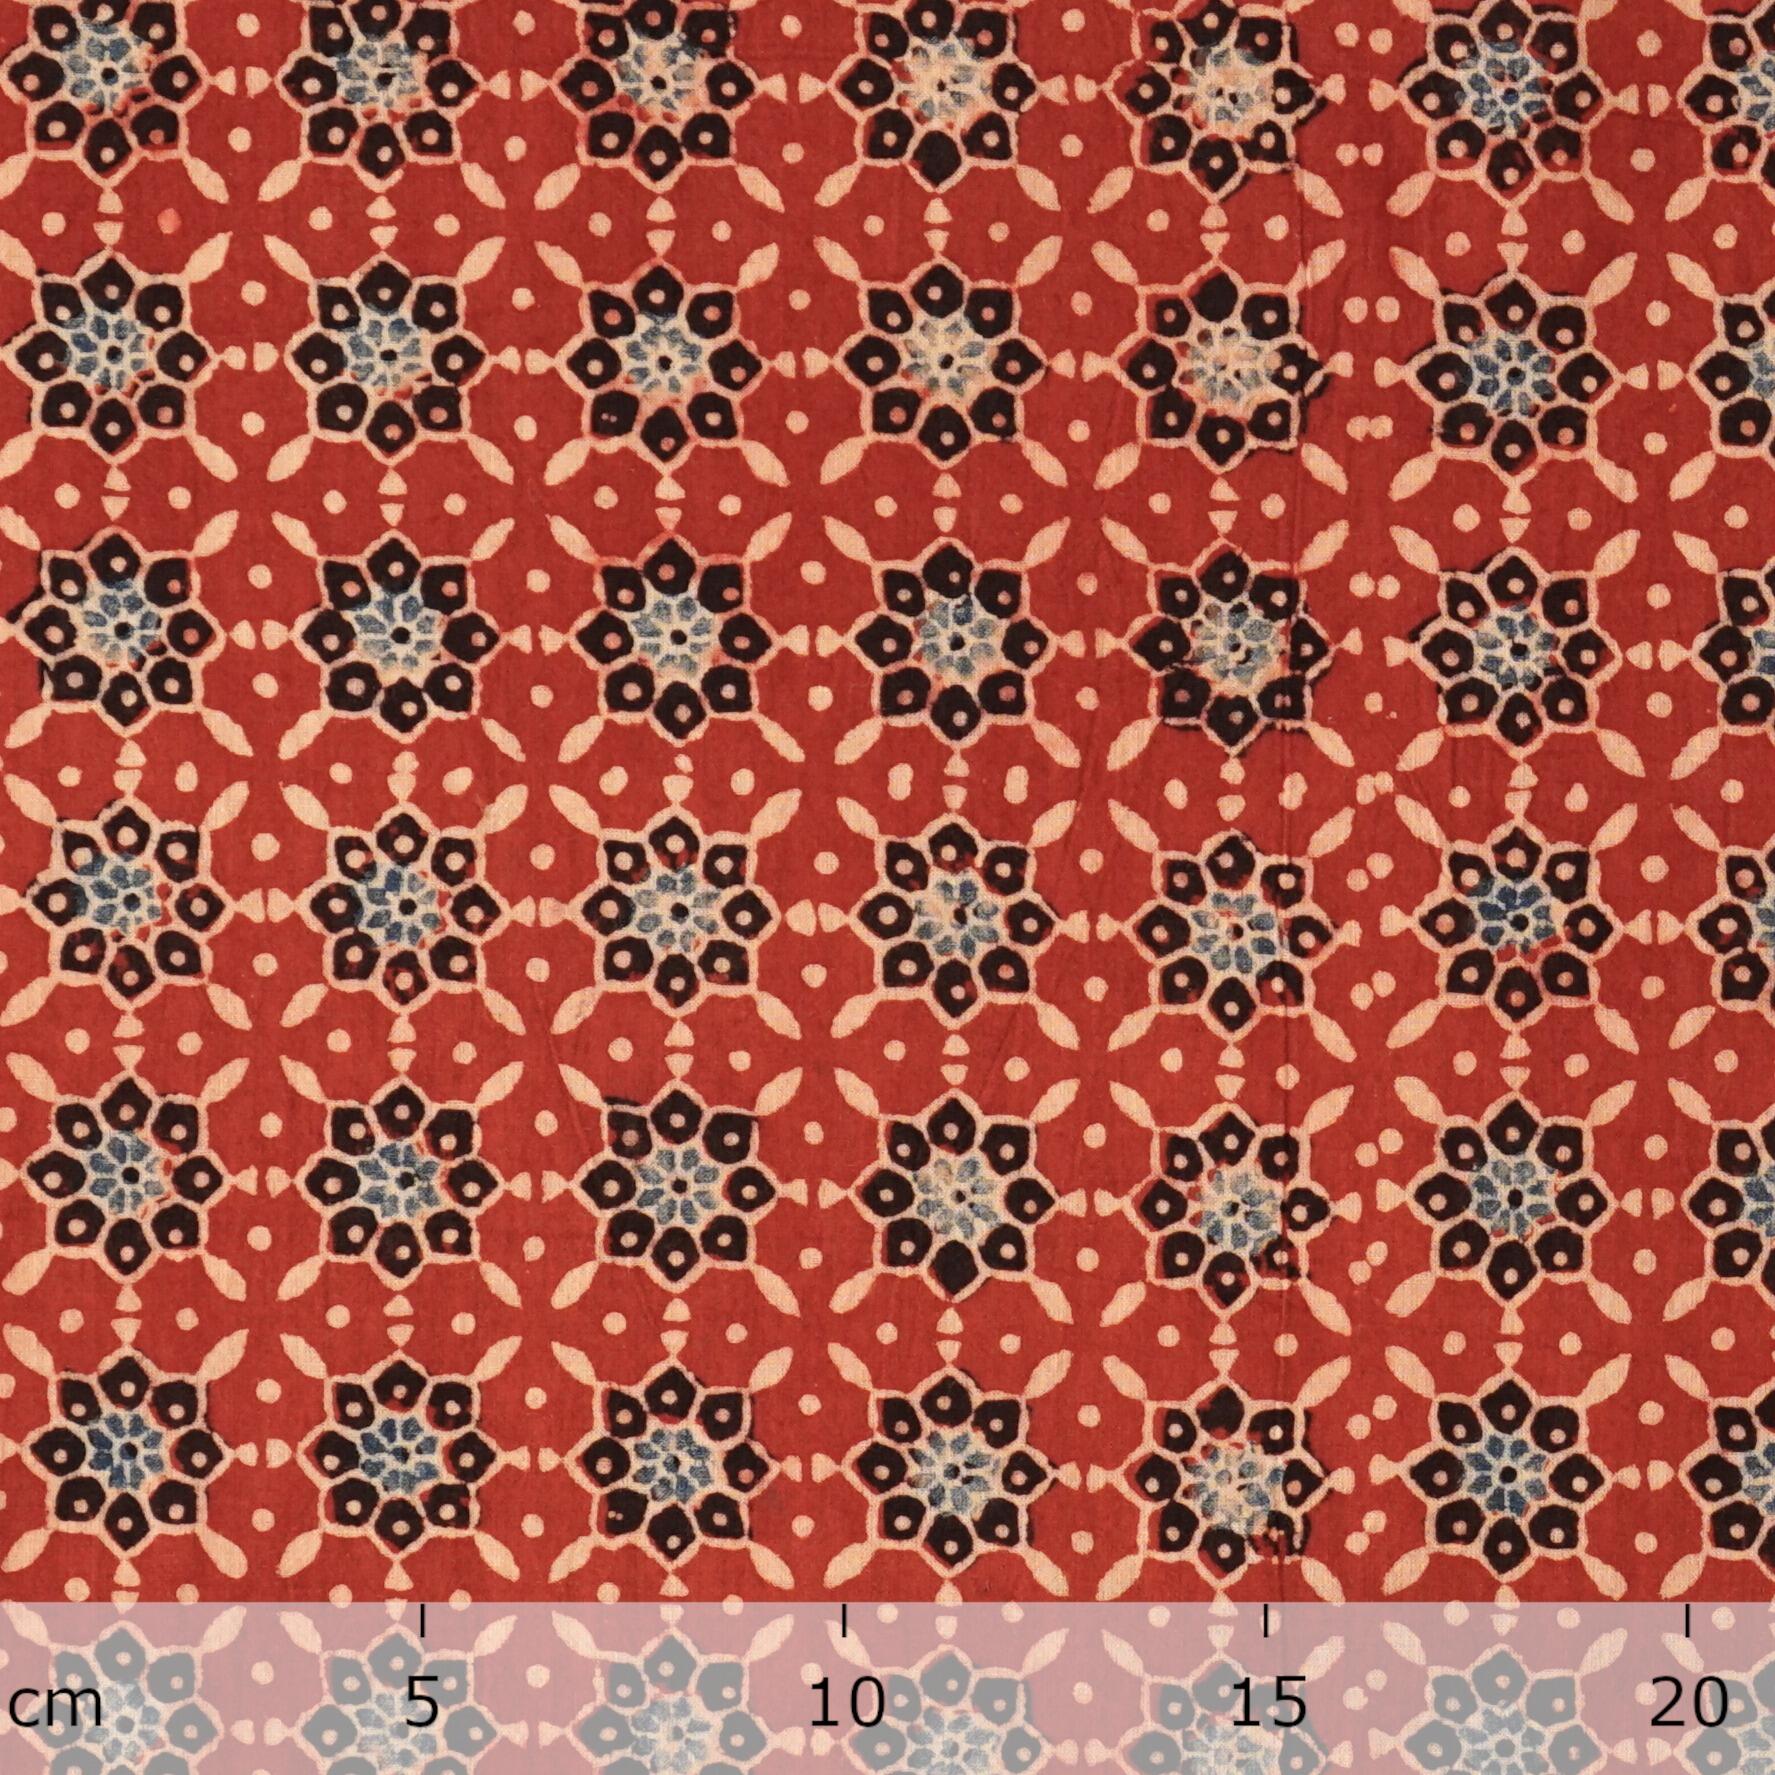 Ajrak Block-Printed Cotton - Starburst Print - Alizarin Red, Black, Indigo - Ruler